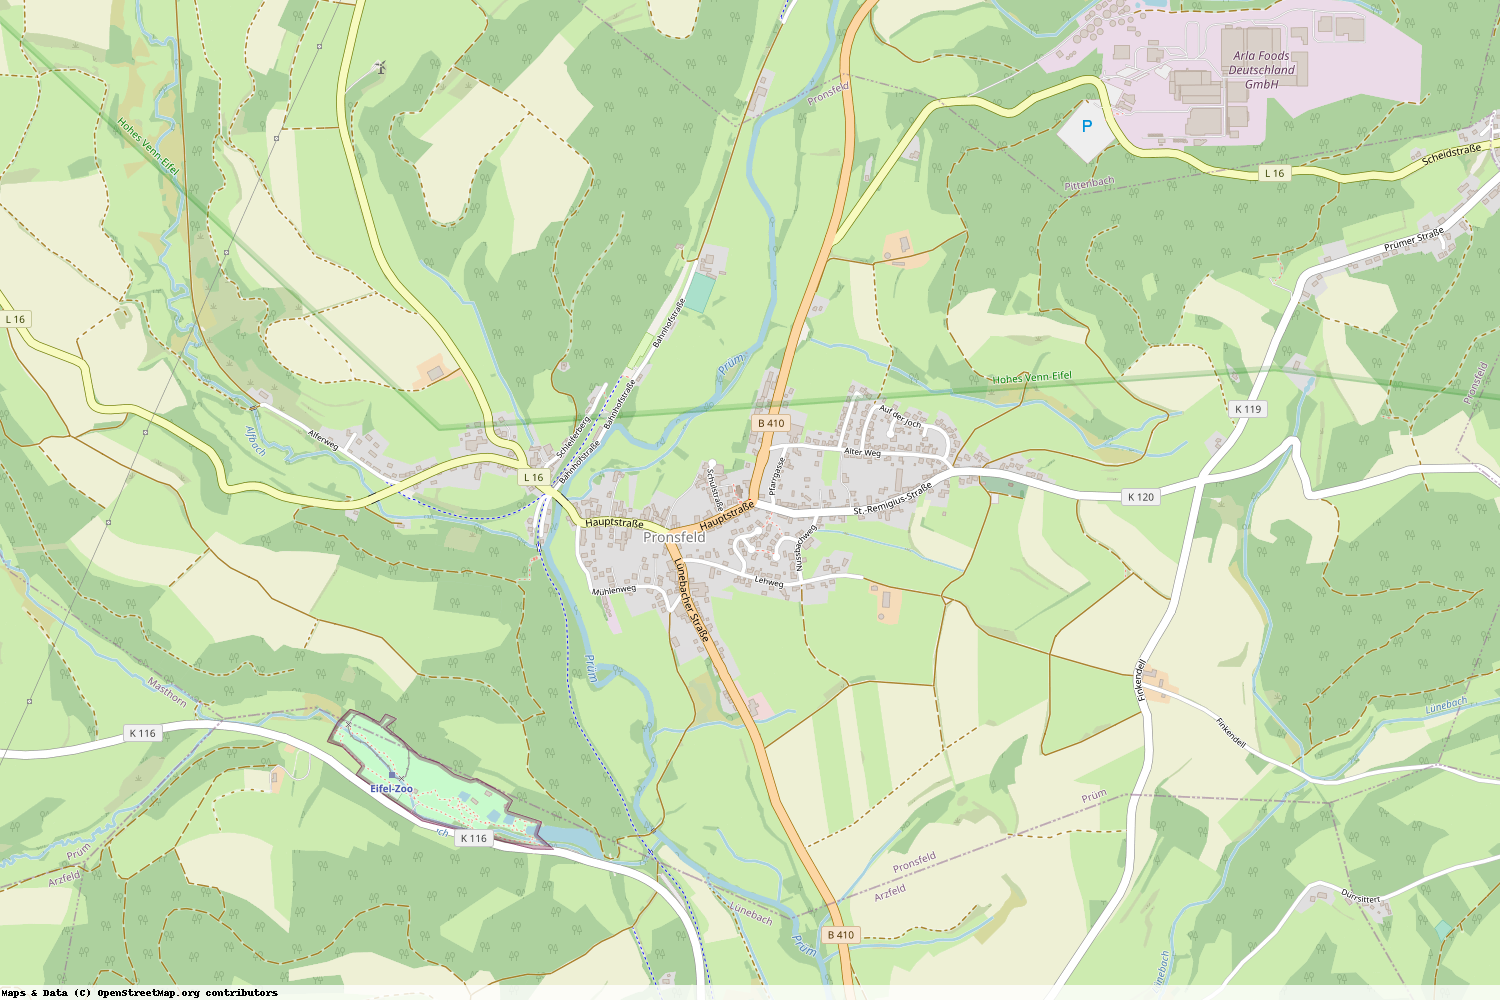 Ist gerade Stromausfall in Rheinland-Pfalz - Eifelkreis Bitburg-Prüm - Pronsfeld?